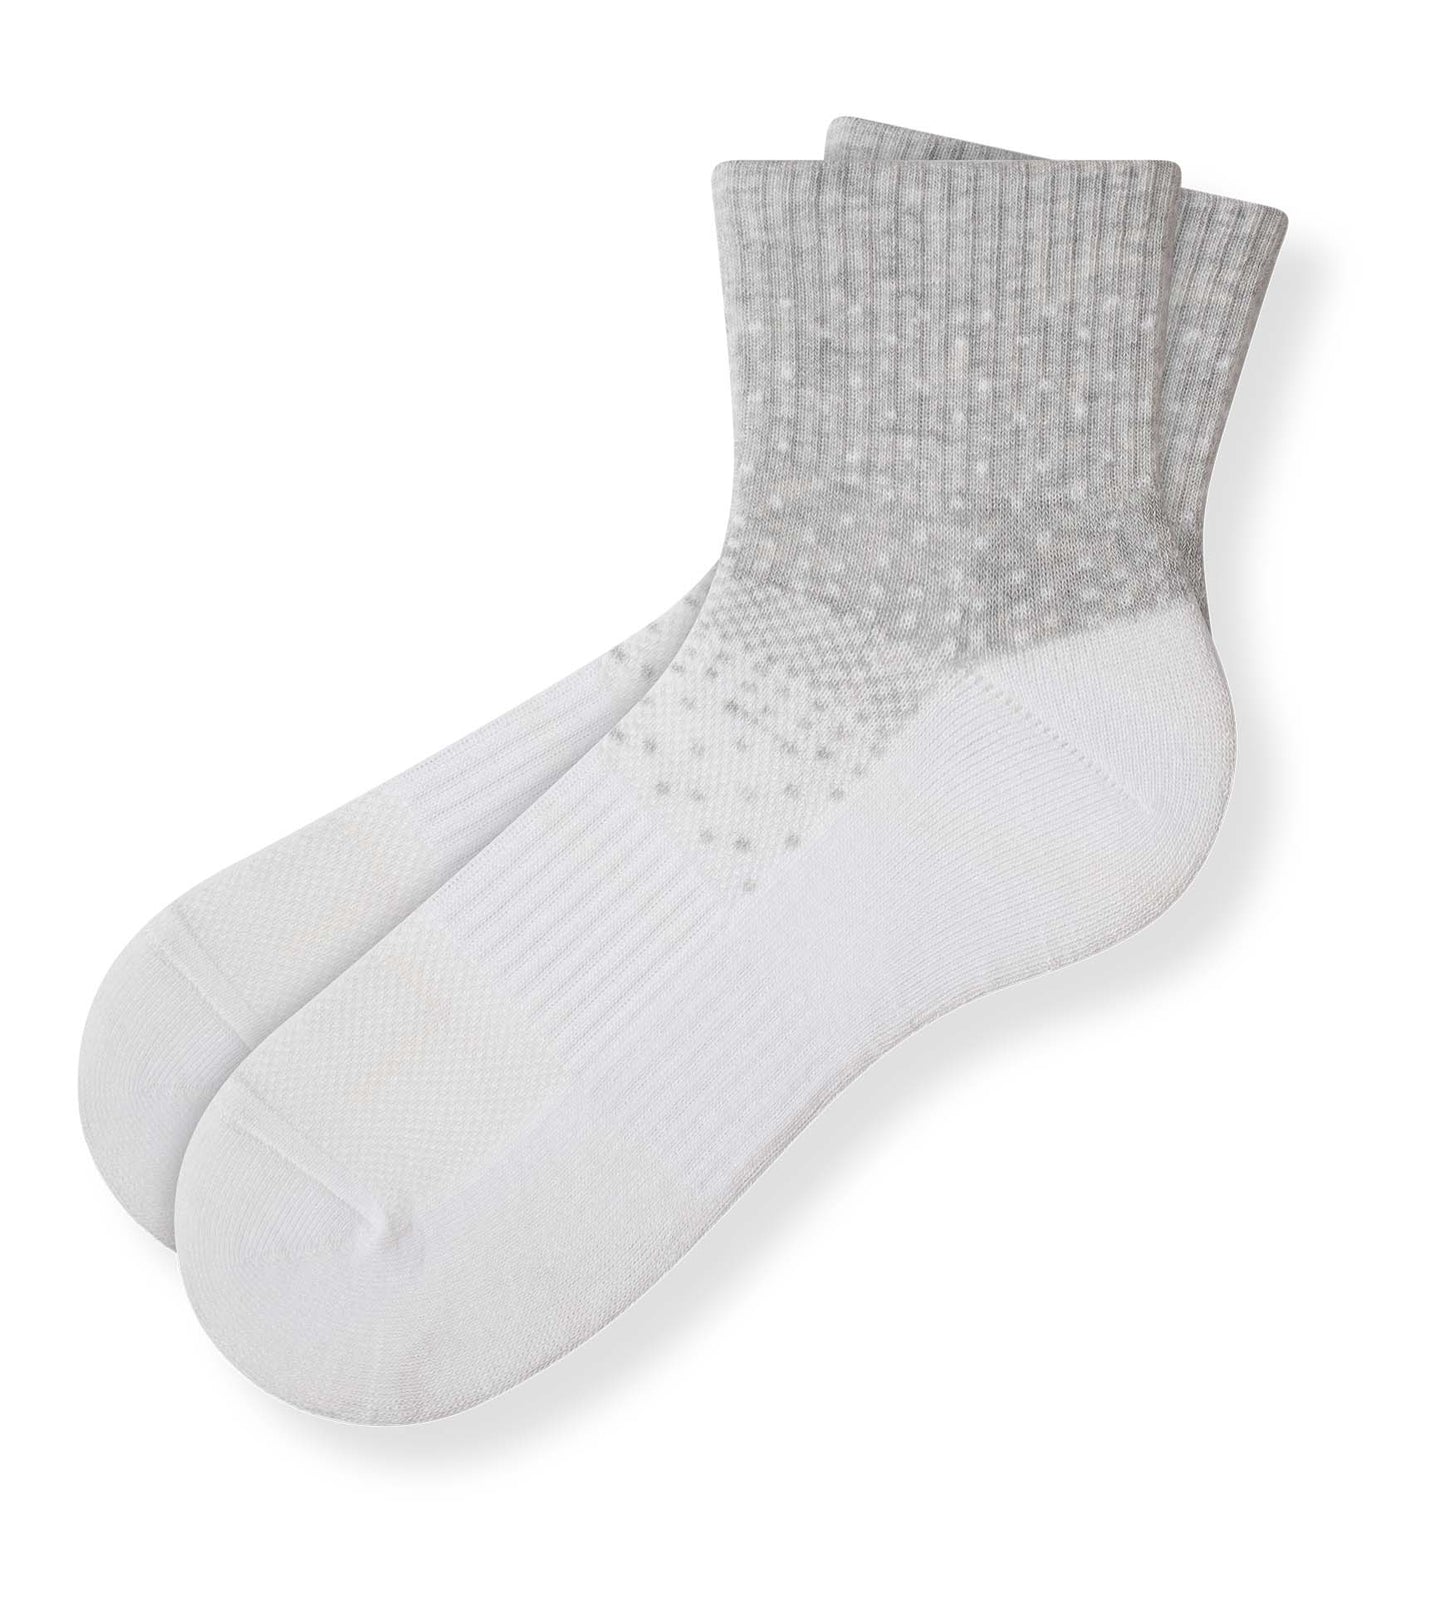 BOWO Cushion Ankle Socks 3 pack Gains boro, Silver, Light Gray, Dark Gray, Dark Gray, Silver, Whitesmoke, Gains boro, Gray